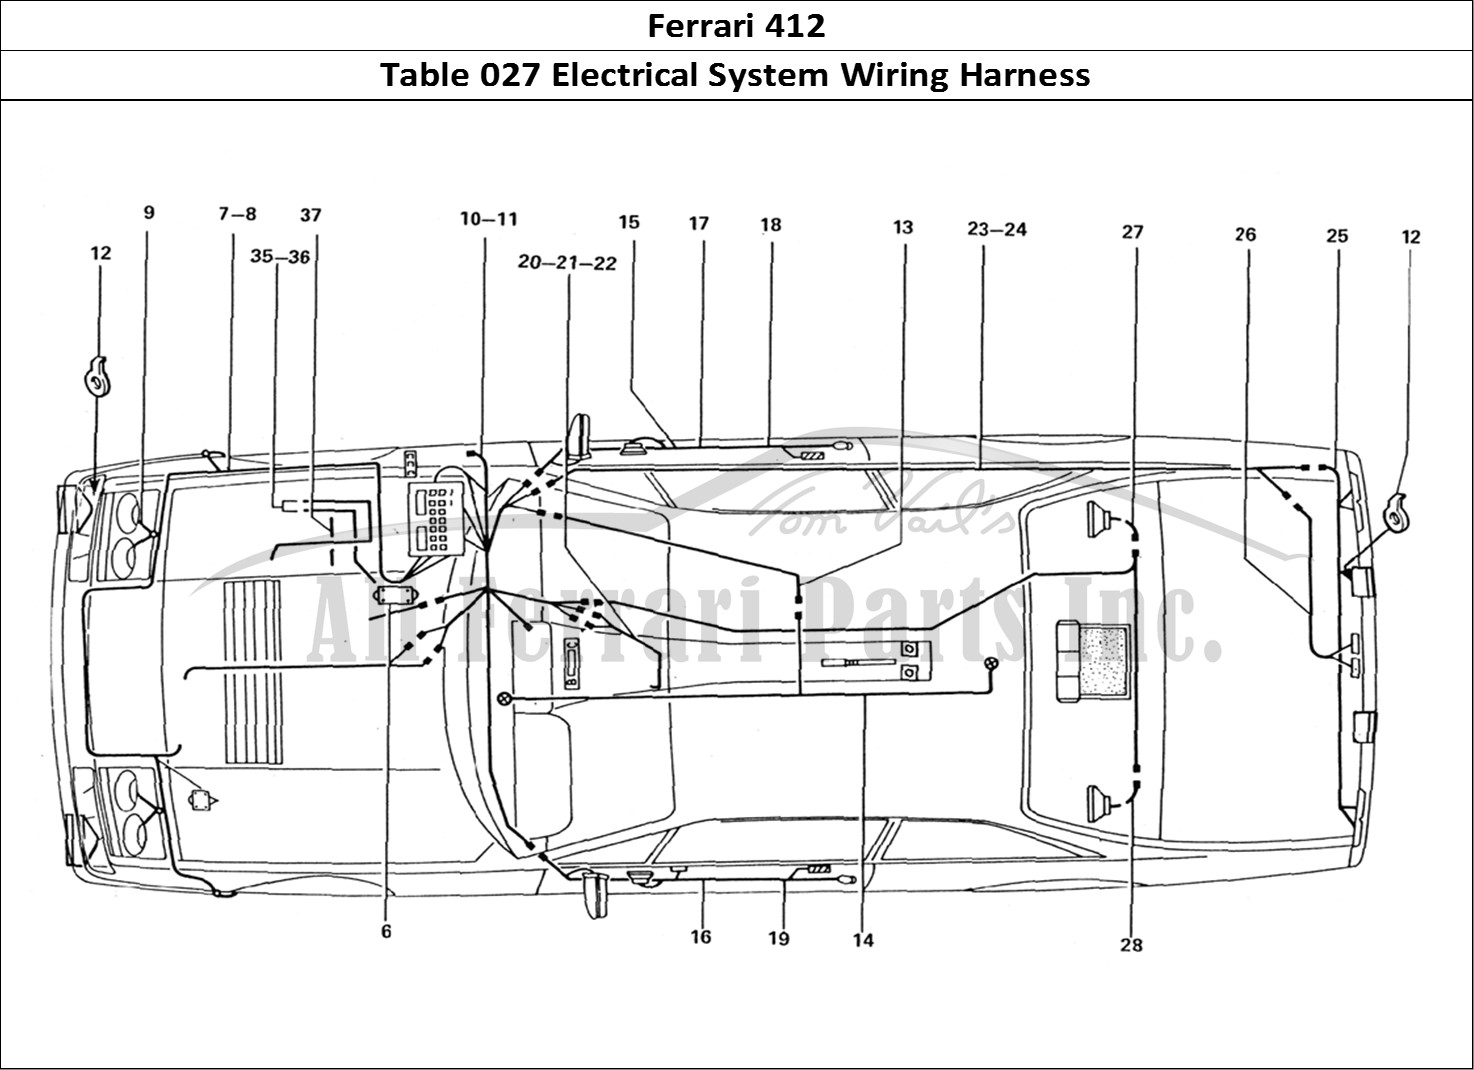 Ferrari Parts Ferrari 412 (Coachwork) Page 027 Car Loom